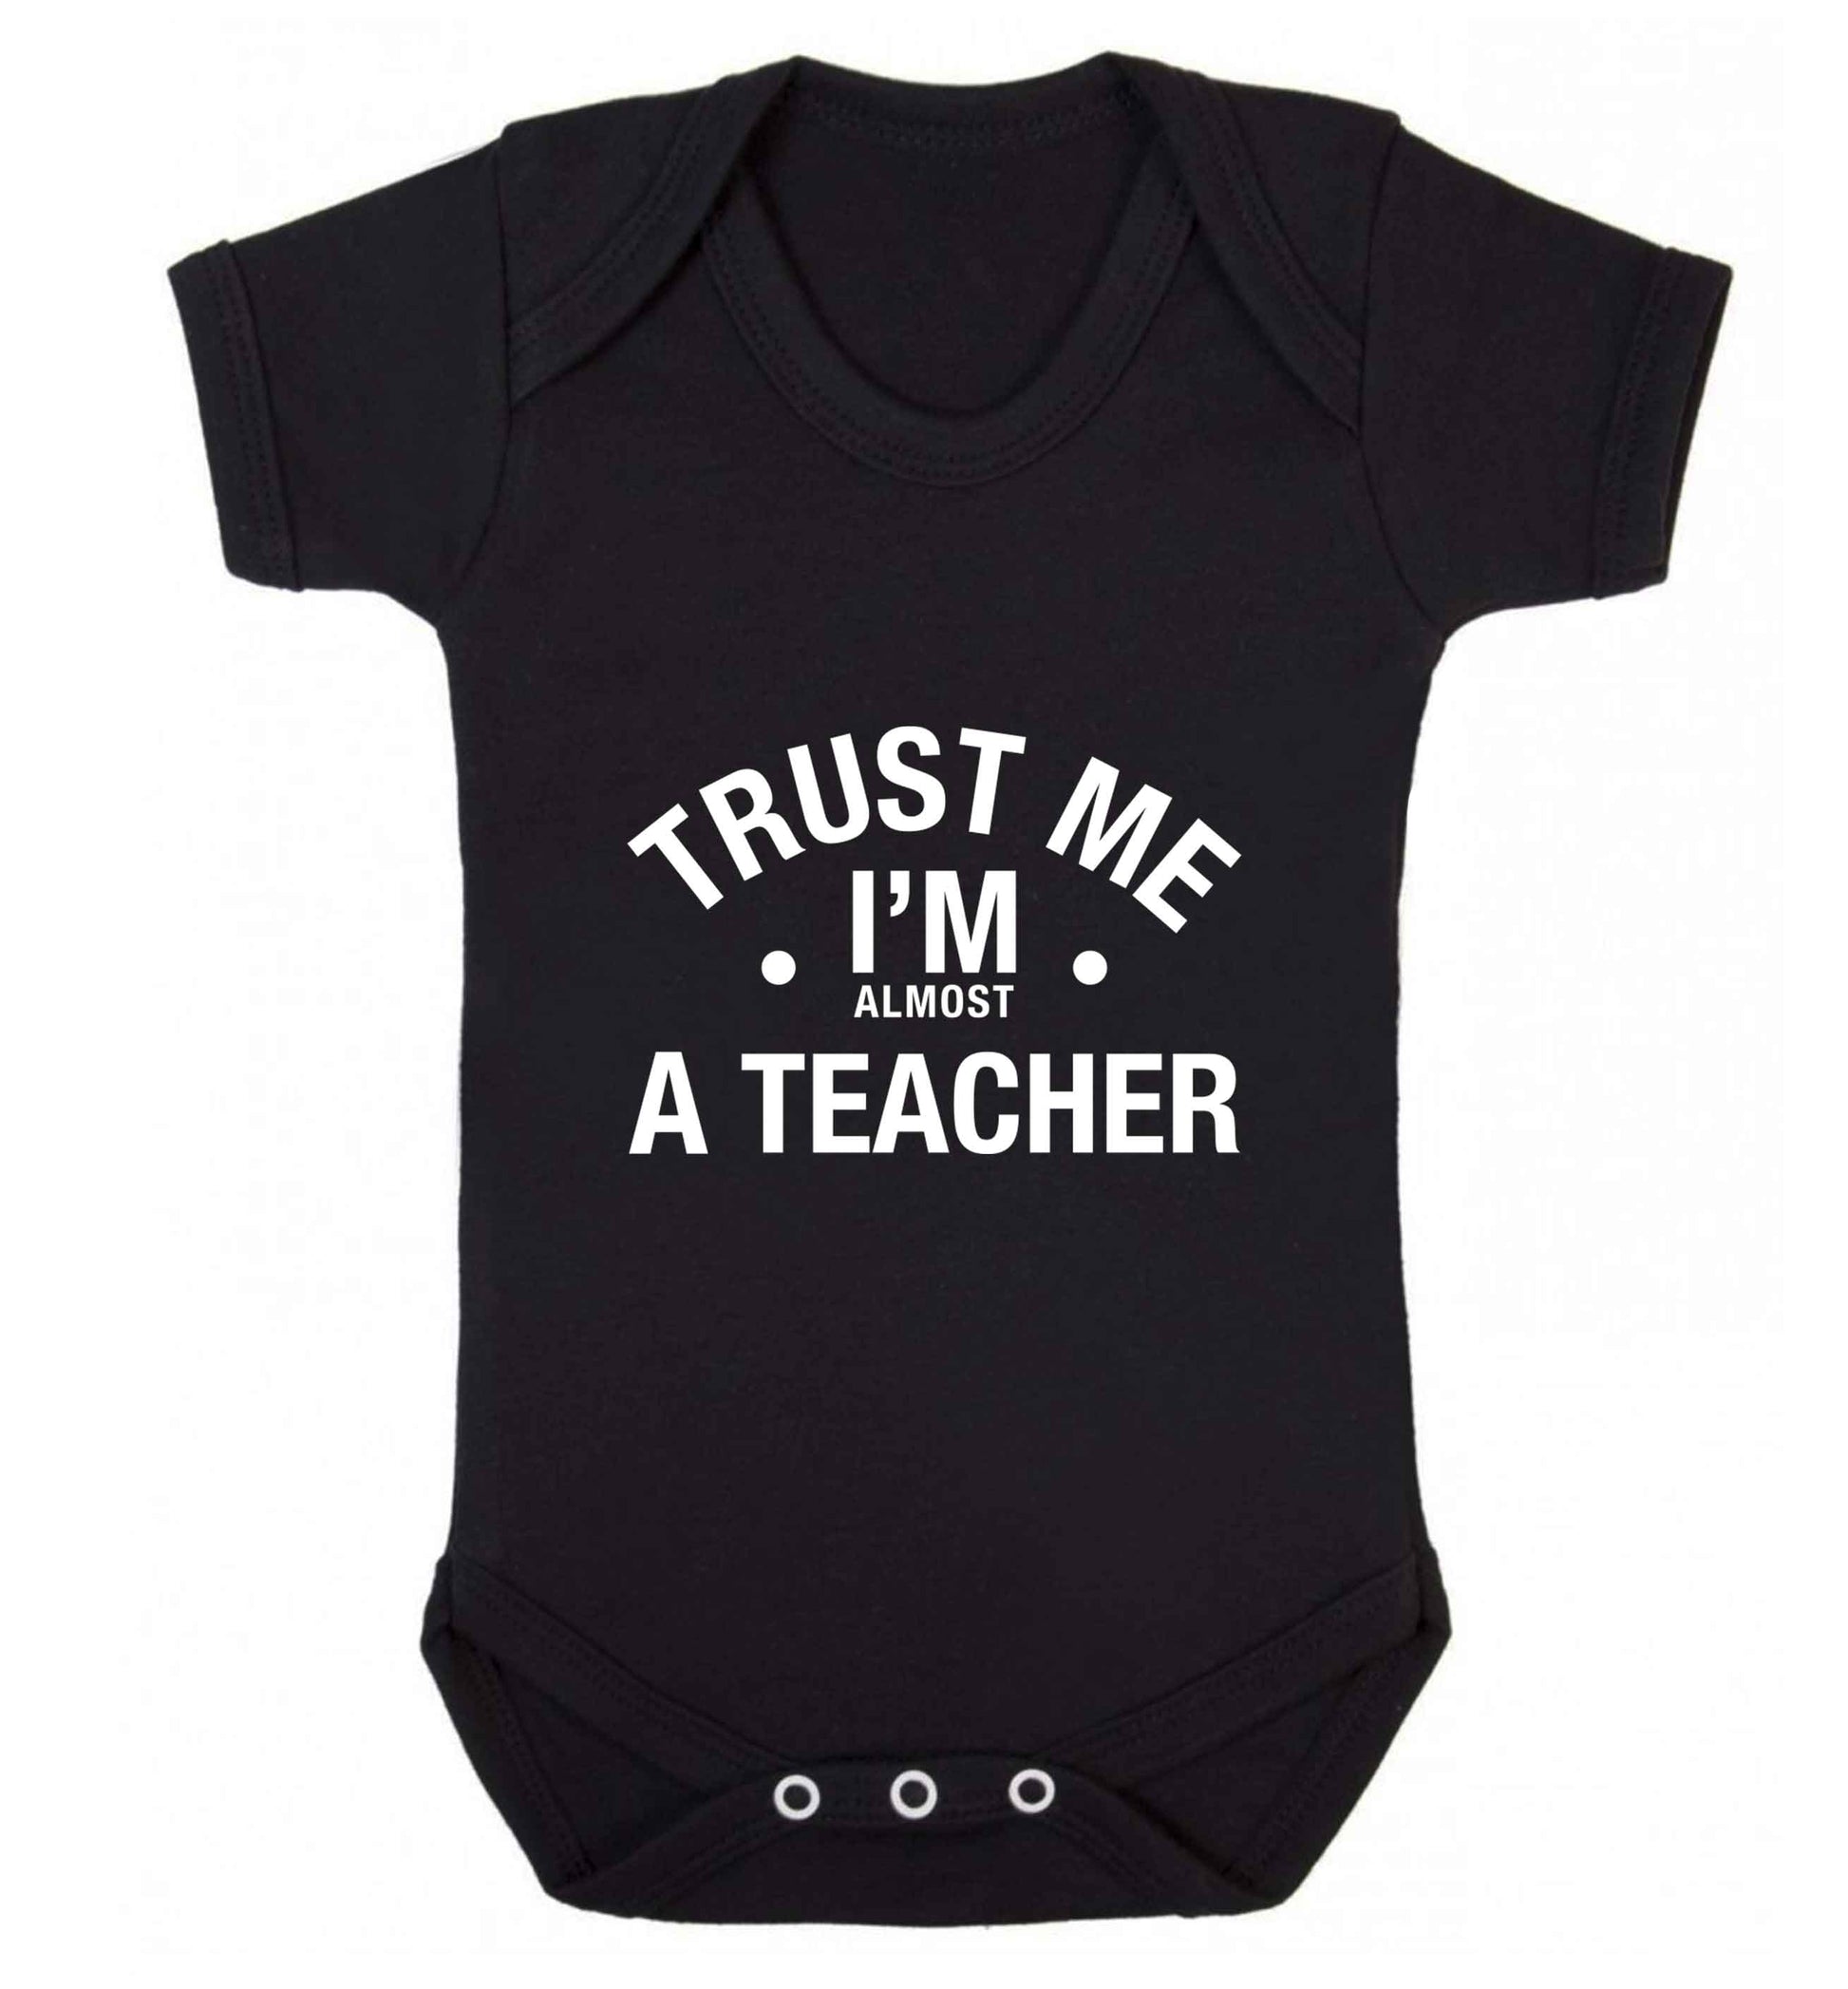 Trust me I'm almost a teacher baby vest black 18-24 months